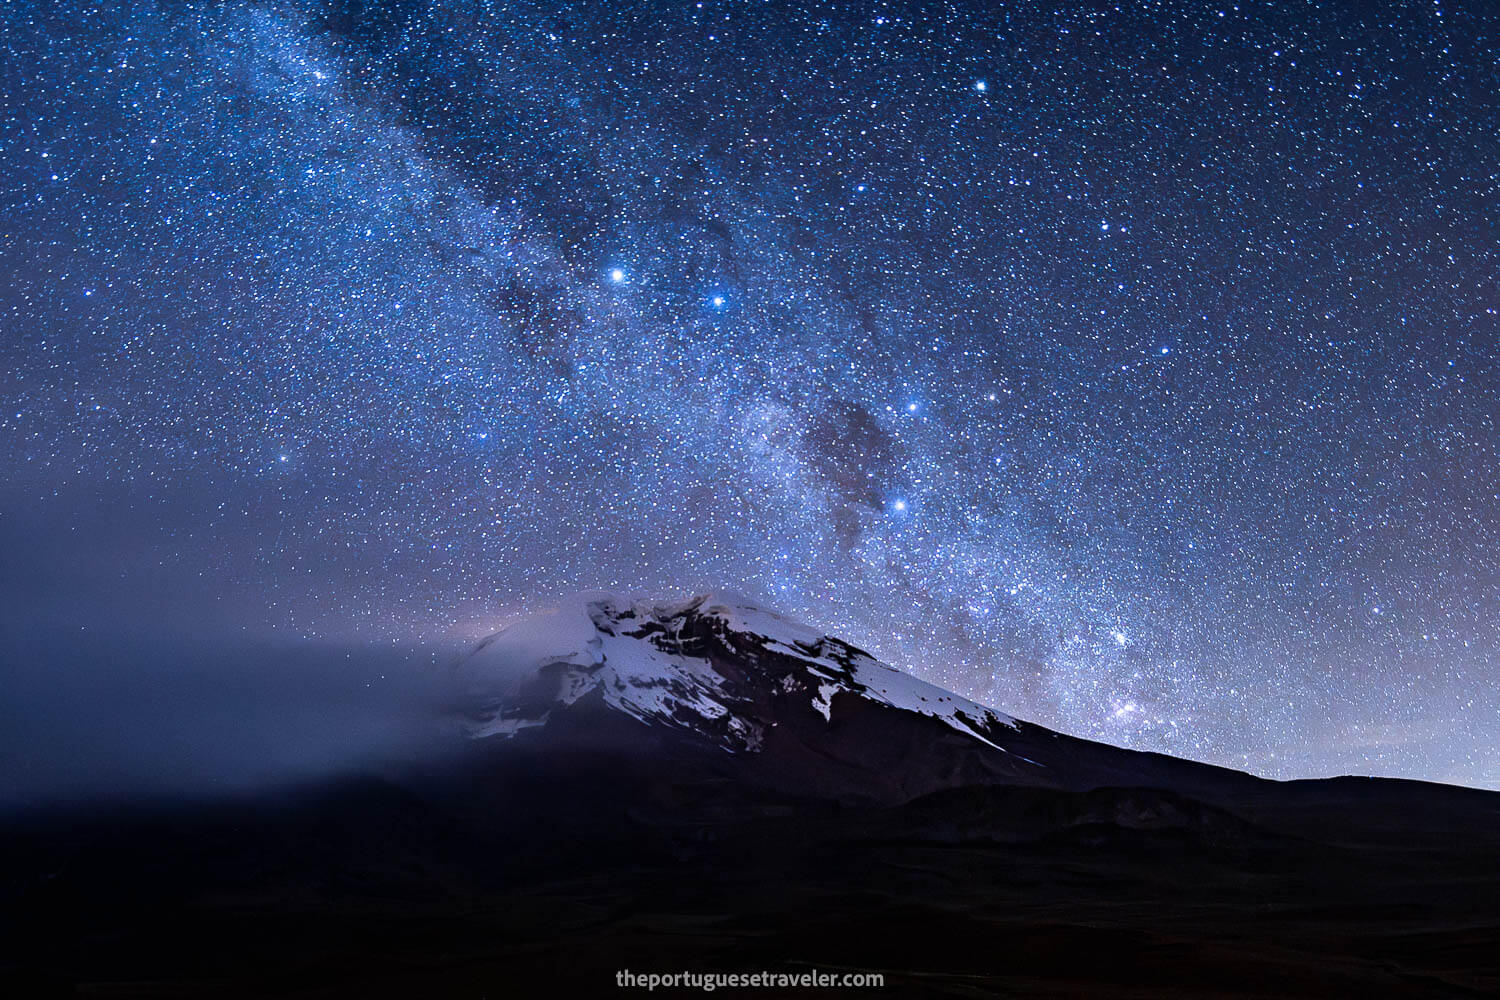 The Milky Way over Chimborazo